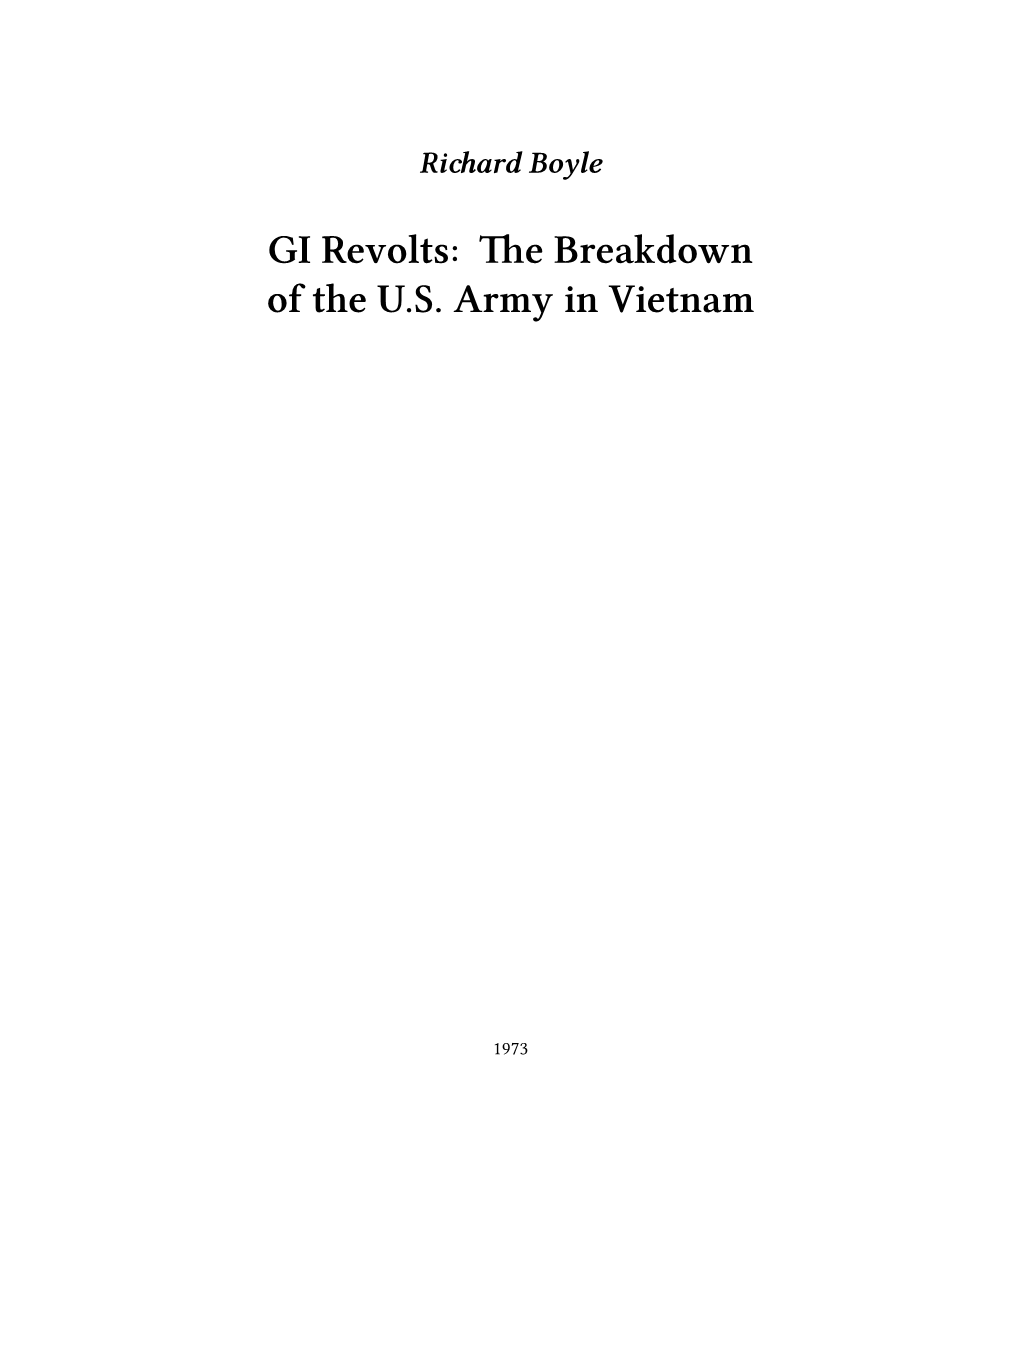 GI Revolts: the Breakdown of the U.S. Army in Vietnam